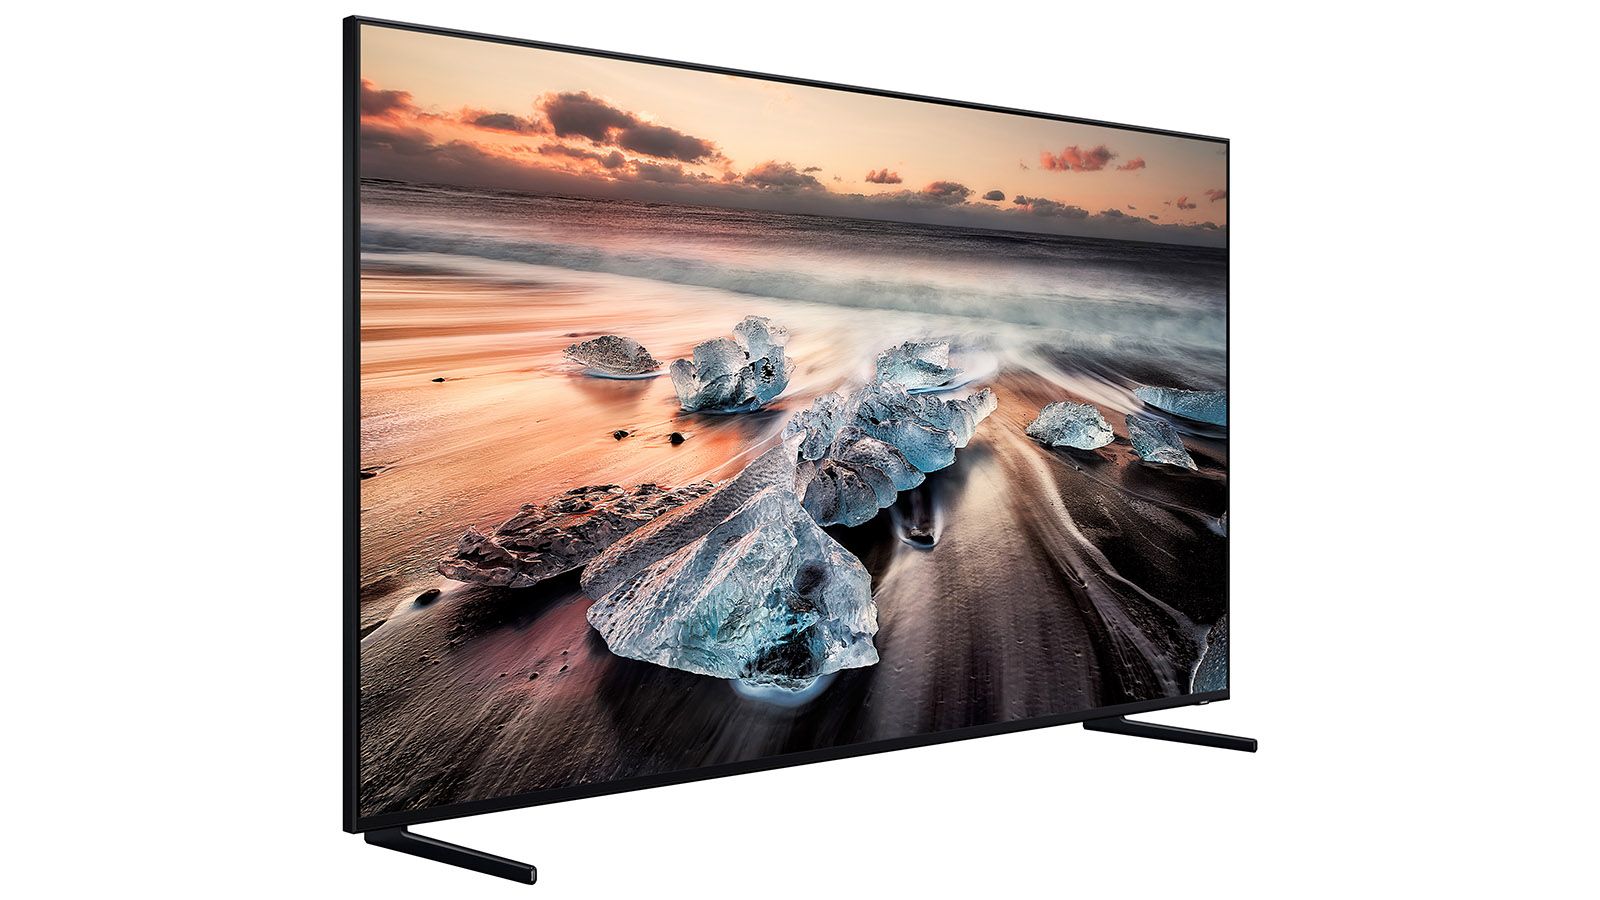 Samsung Q900 8K TV review image 4